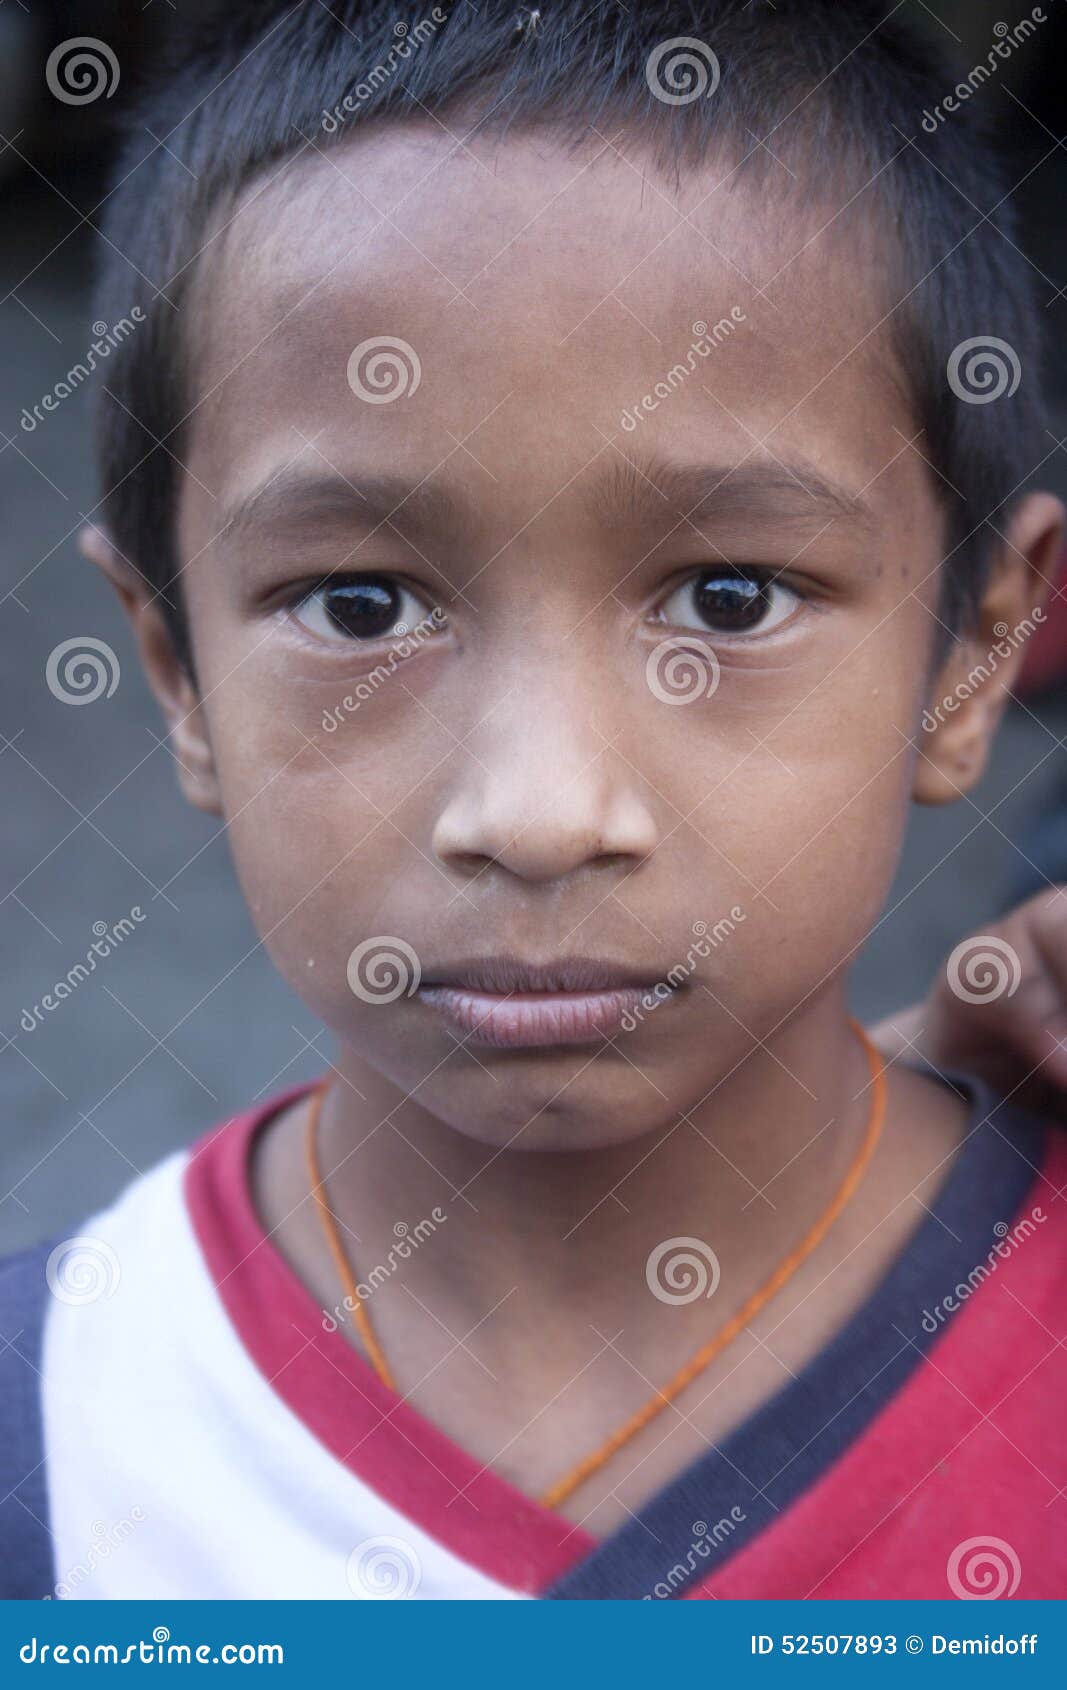 Boy editorial stock photo. Image of childhood, little - 52507893